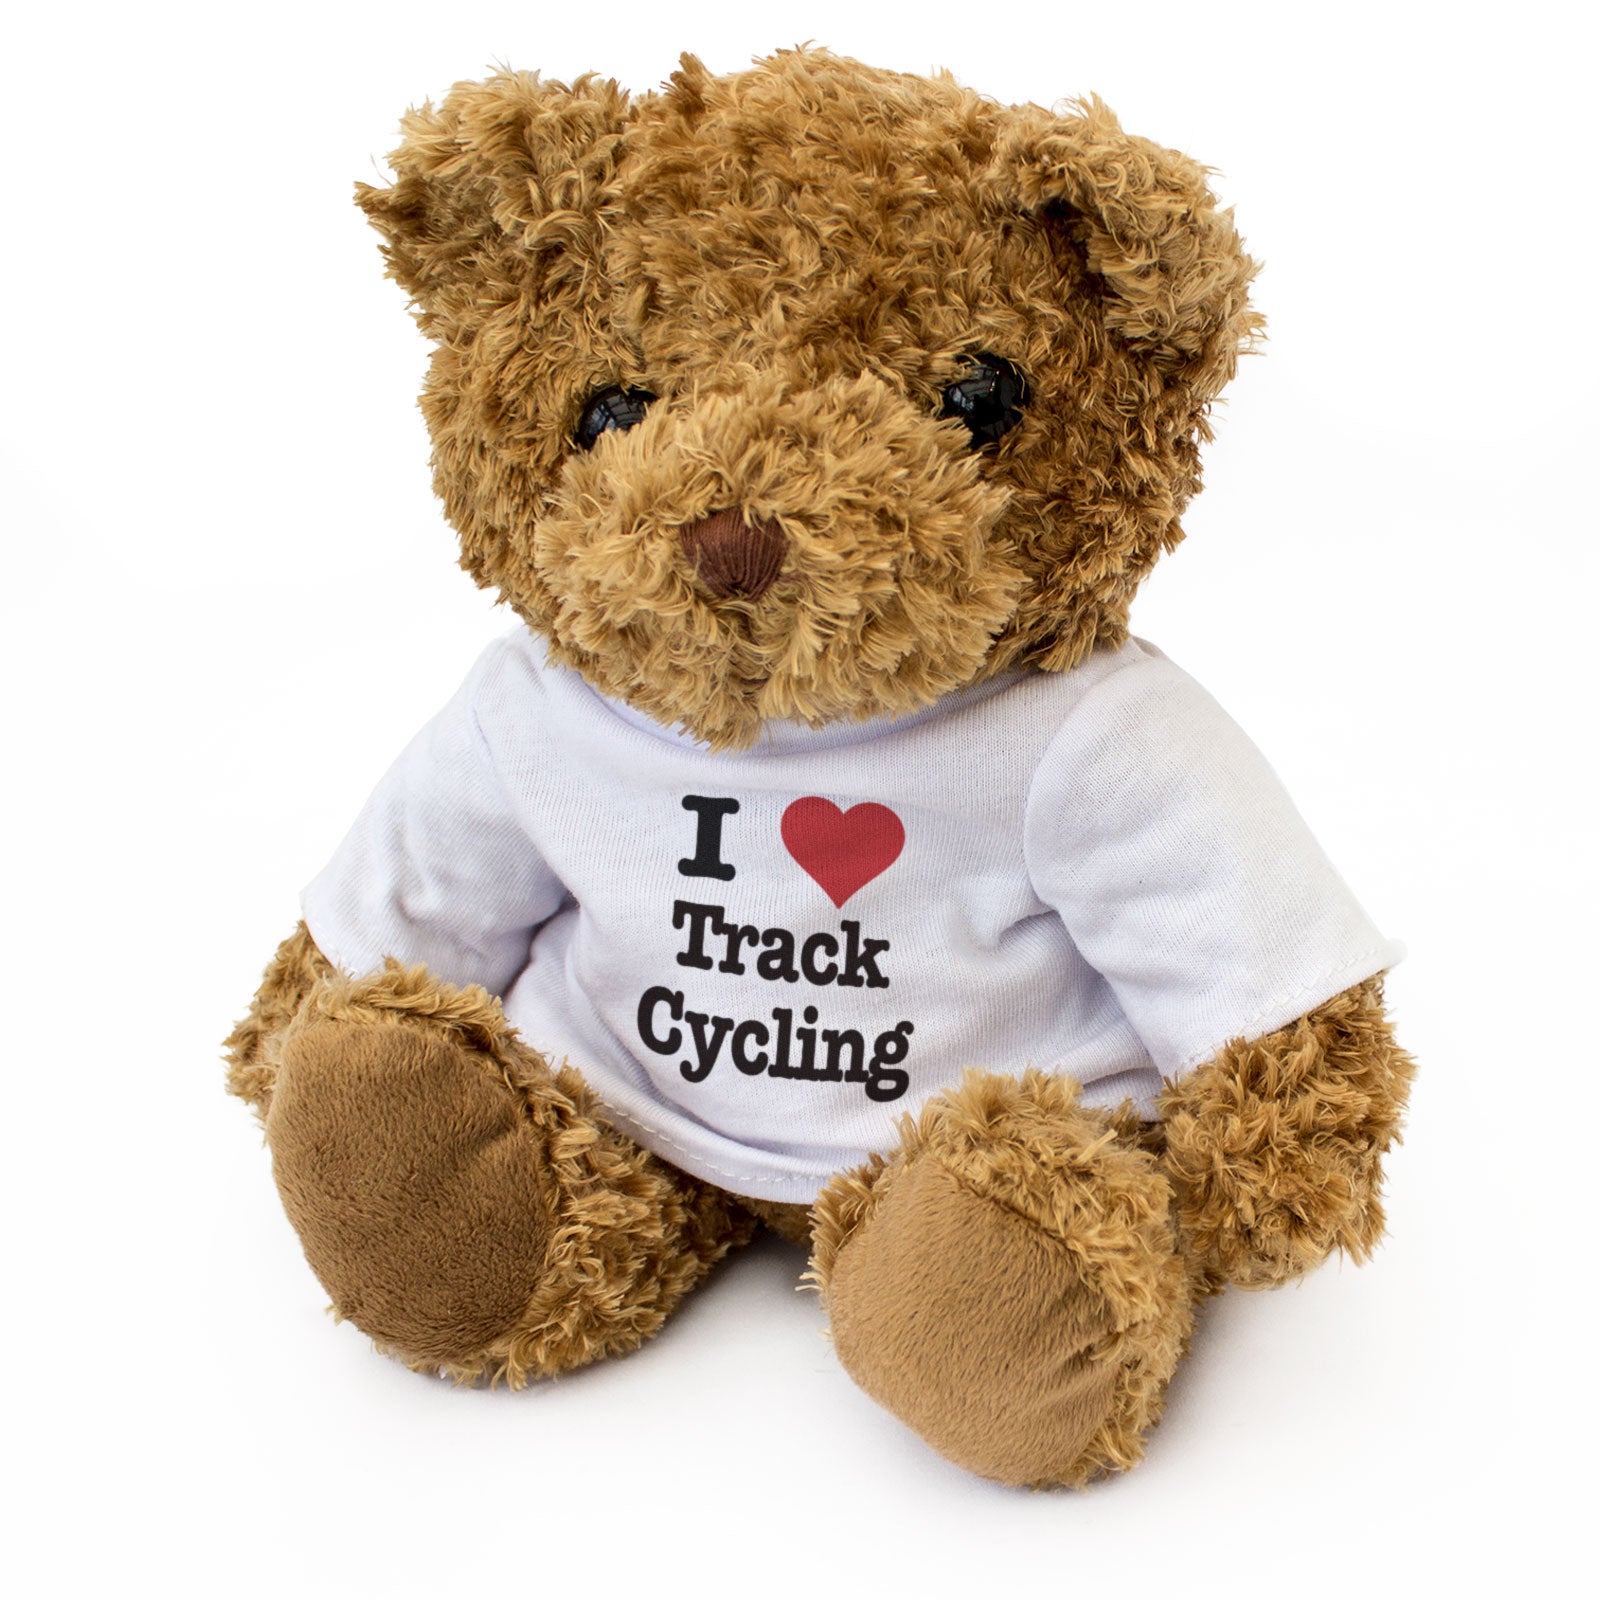 I Love Track Cycling - Teddy Bear